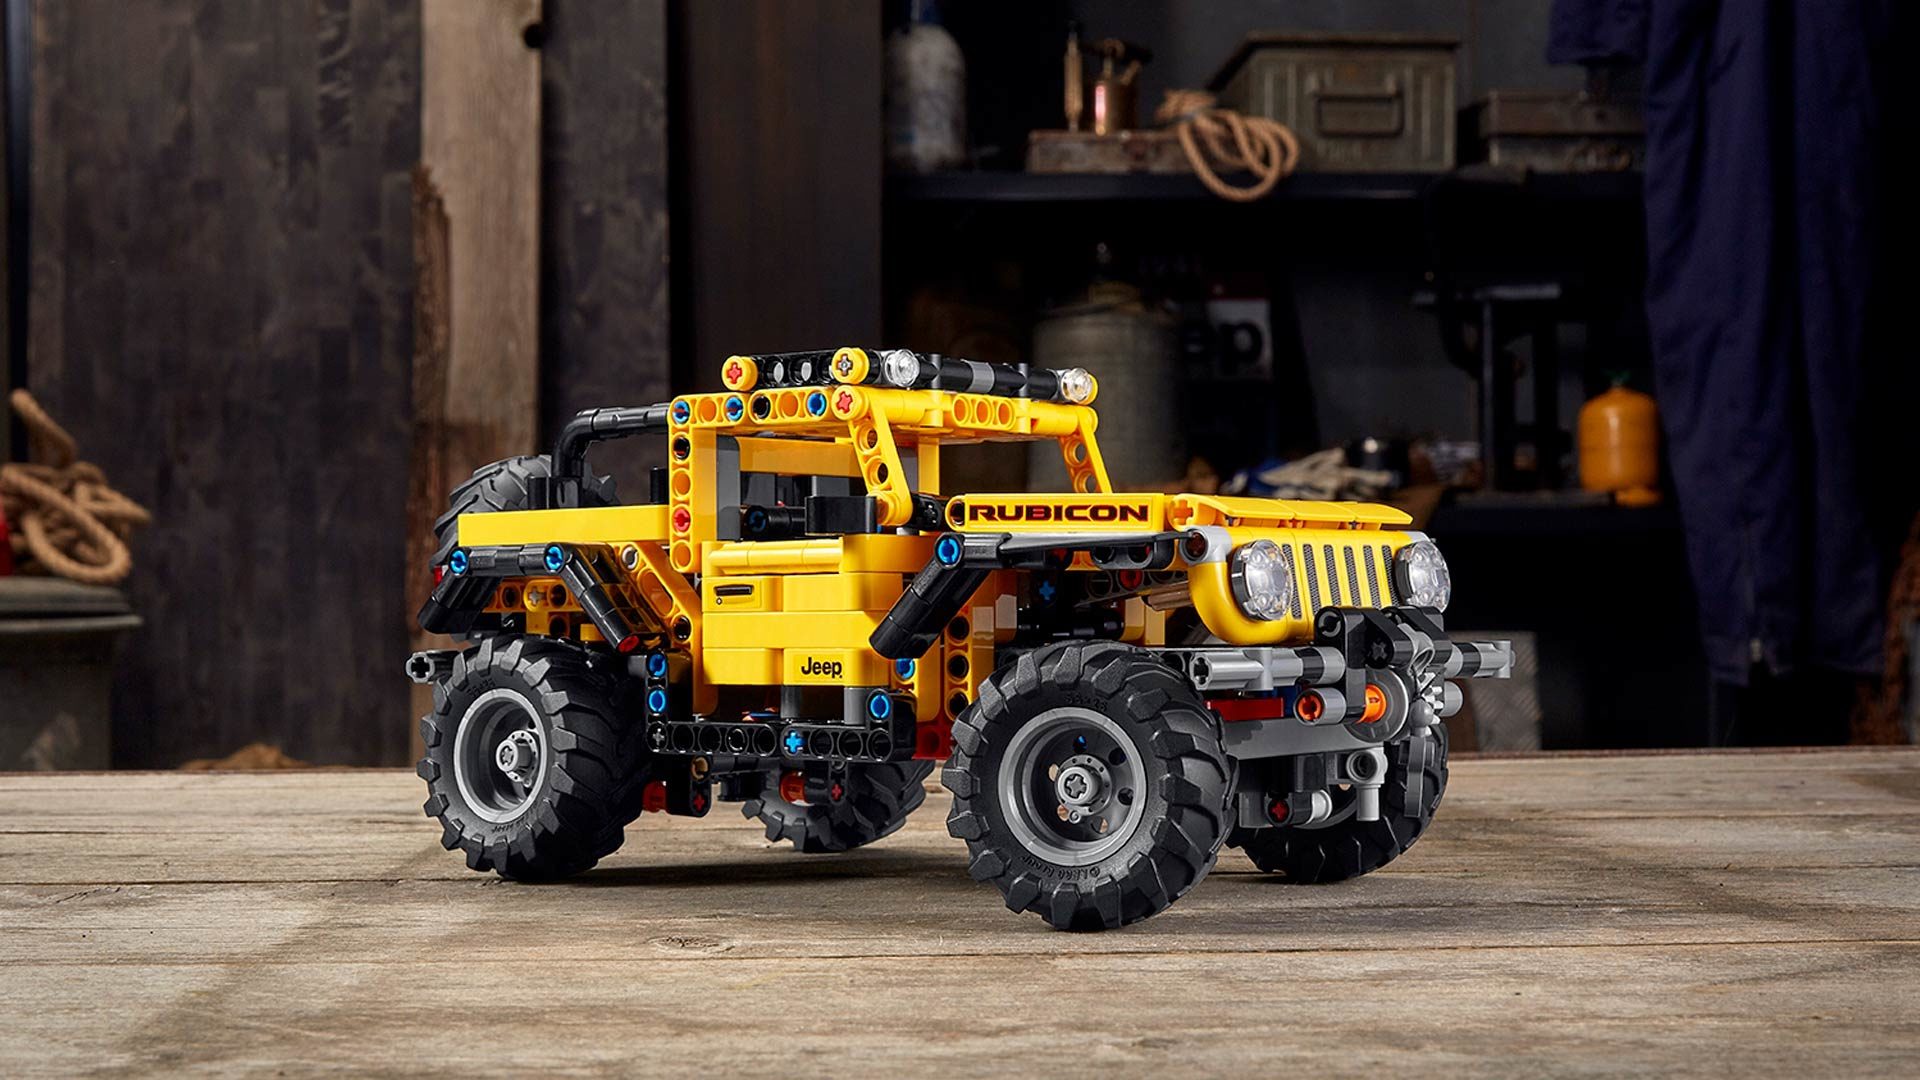 Lego Technic Jeep Wrangler ready for the yellow brick road